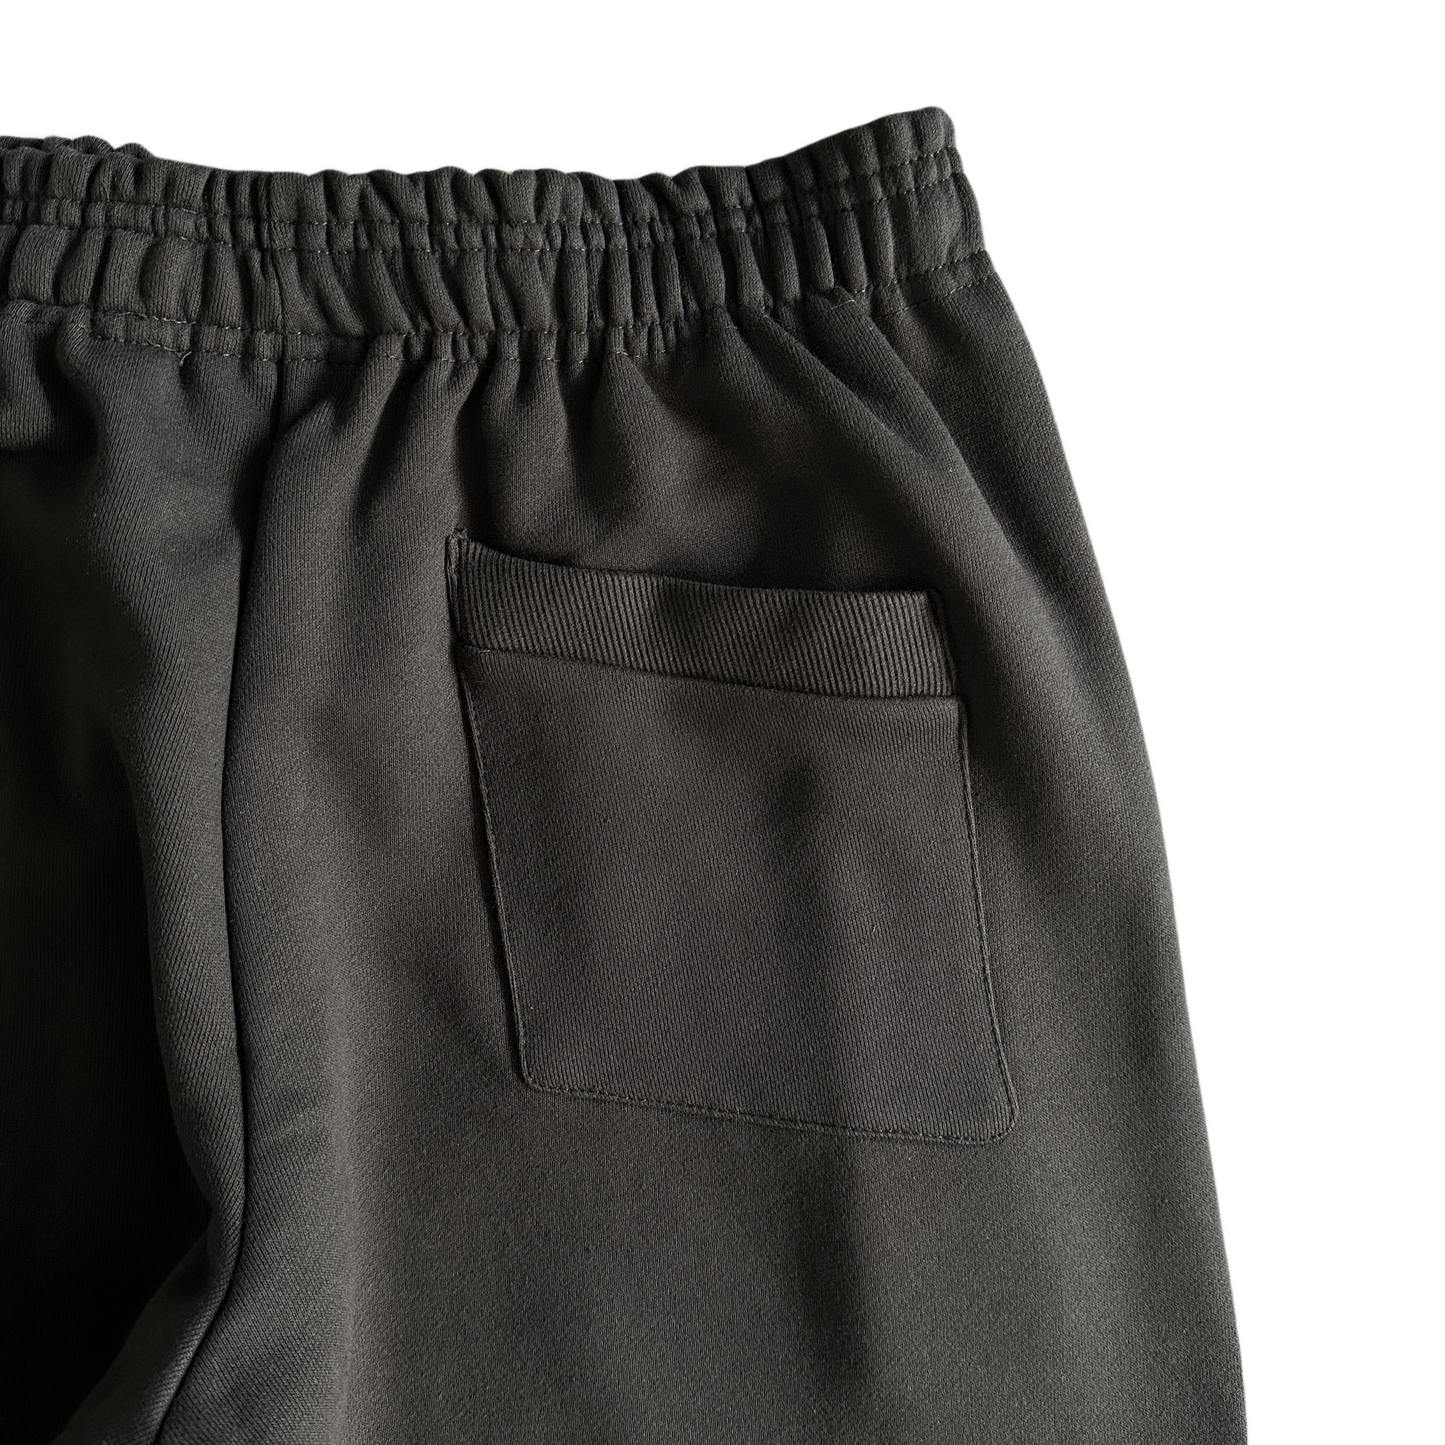 Broken Planet Soot Matching Sweatpants Streetwear Joggers Pants - Black